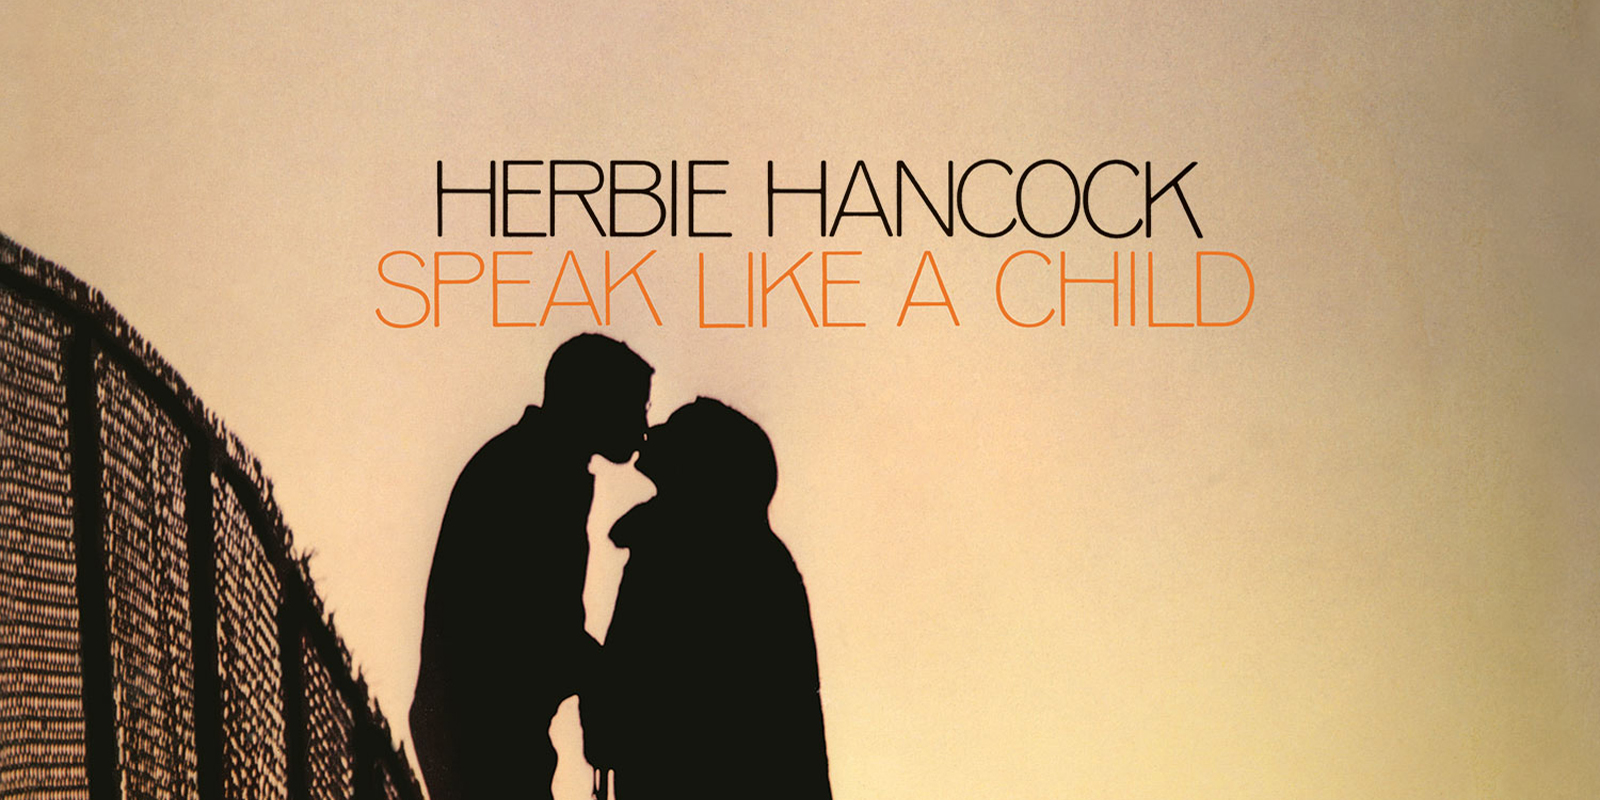 HERBIE HANCOCK TELLS THE WORLD TO 